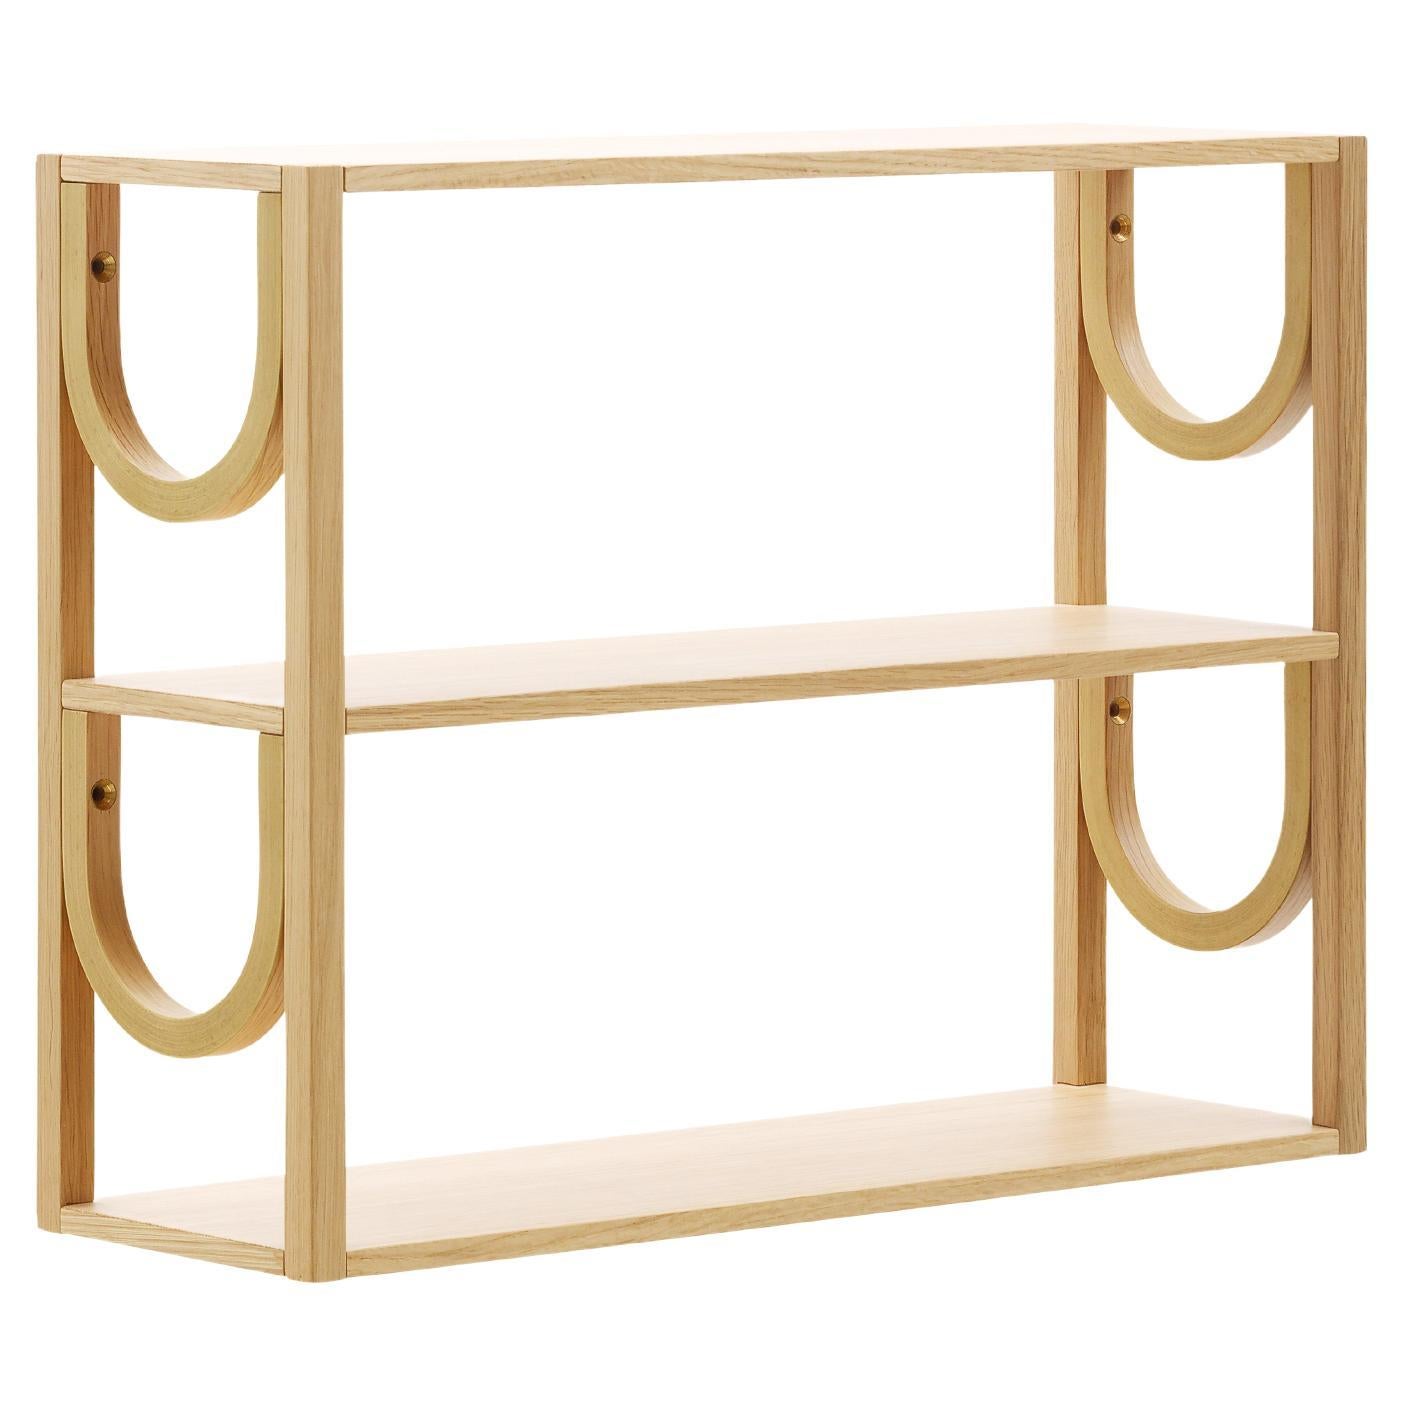 Arch Mini Shelf by Fogia, Light Oak For Sale